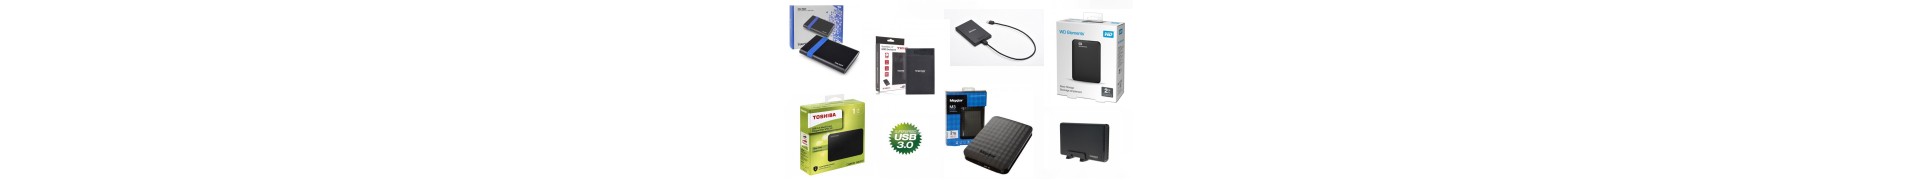 Harddisk USB & Accessori